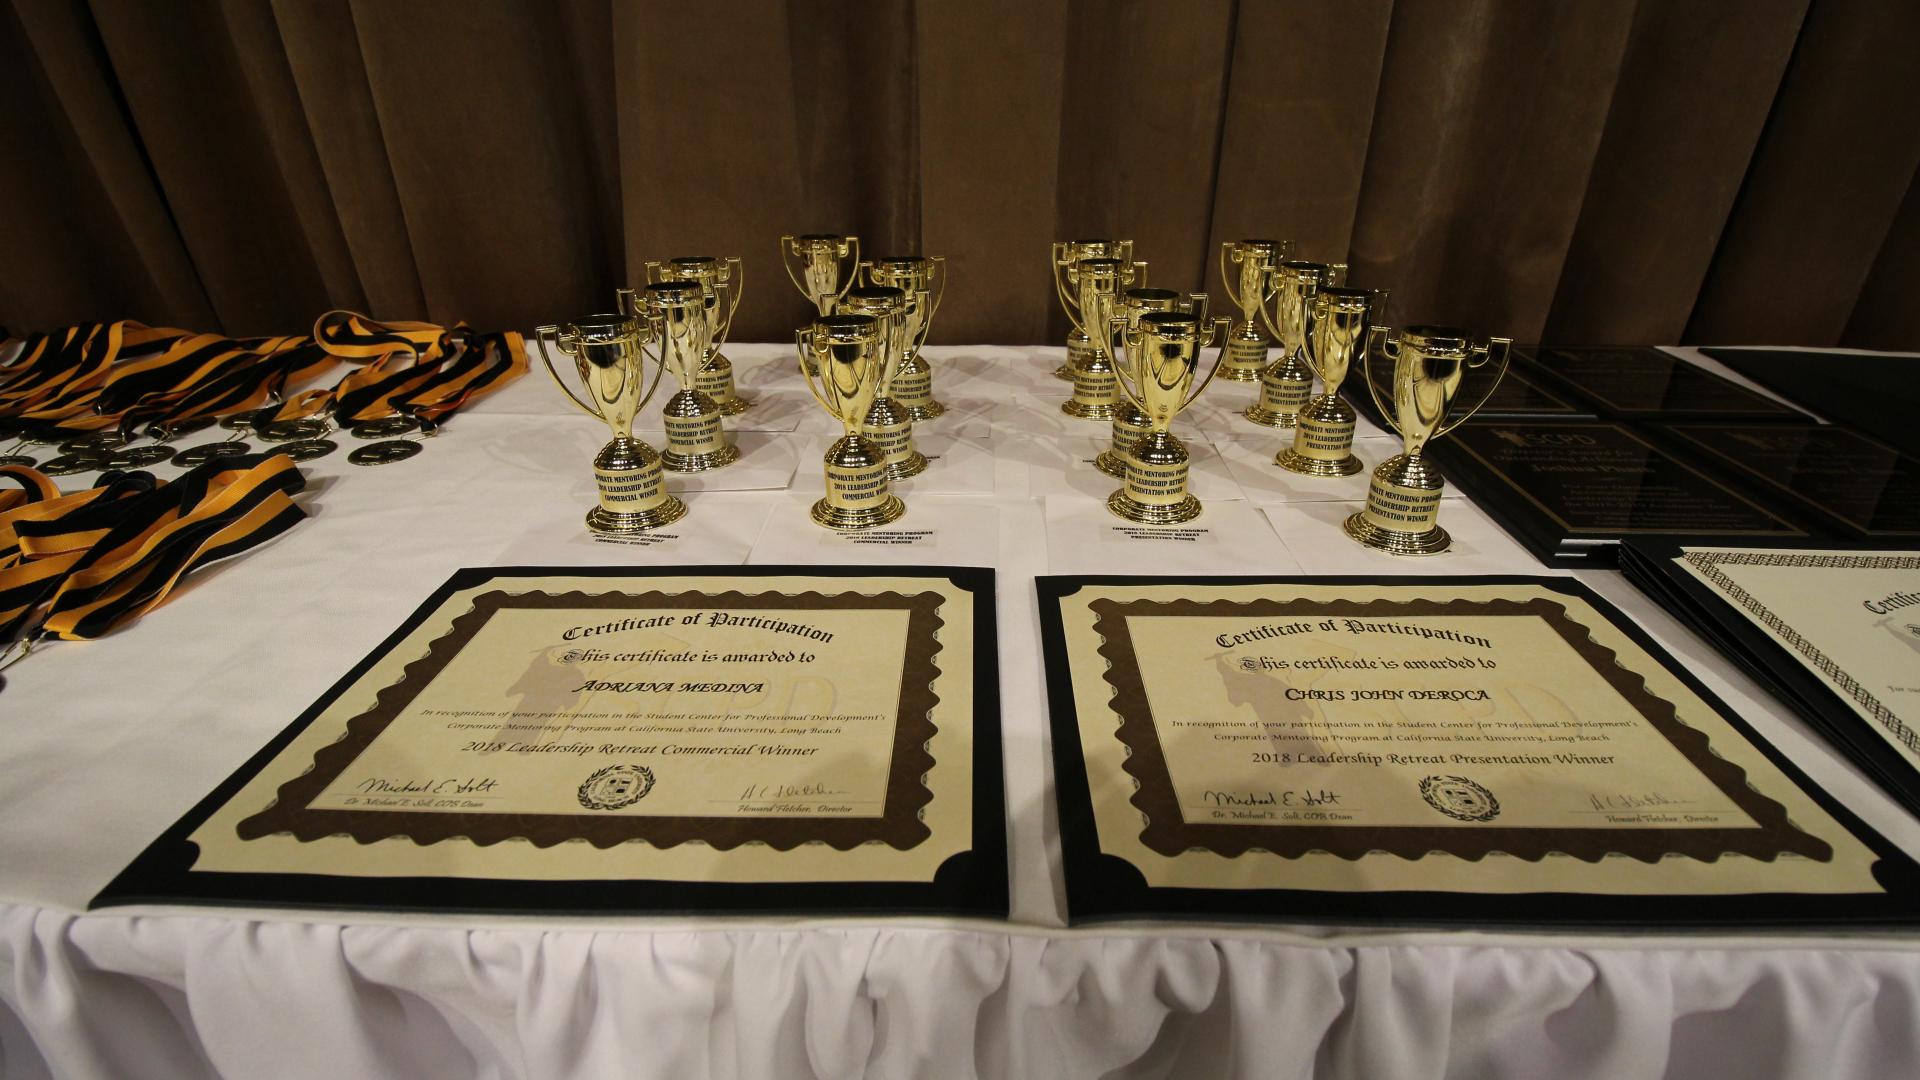 Awards at SCPD COB 2019